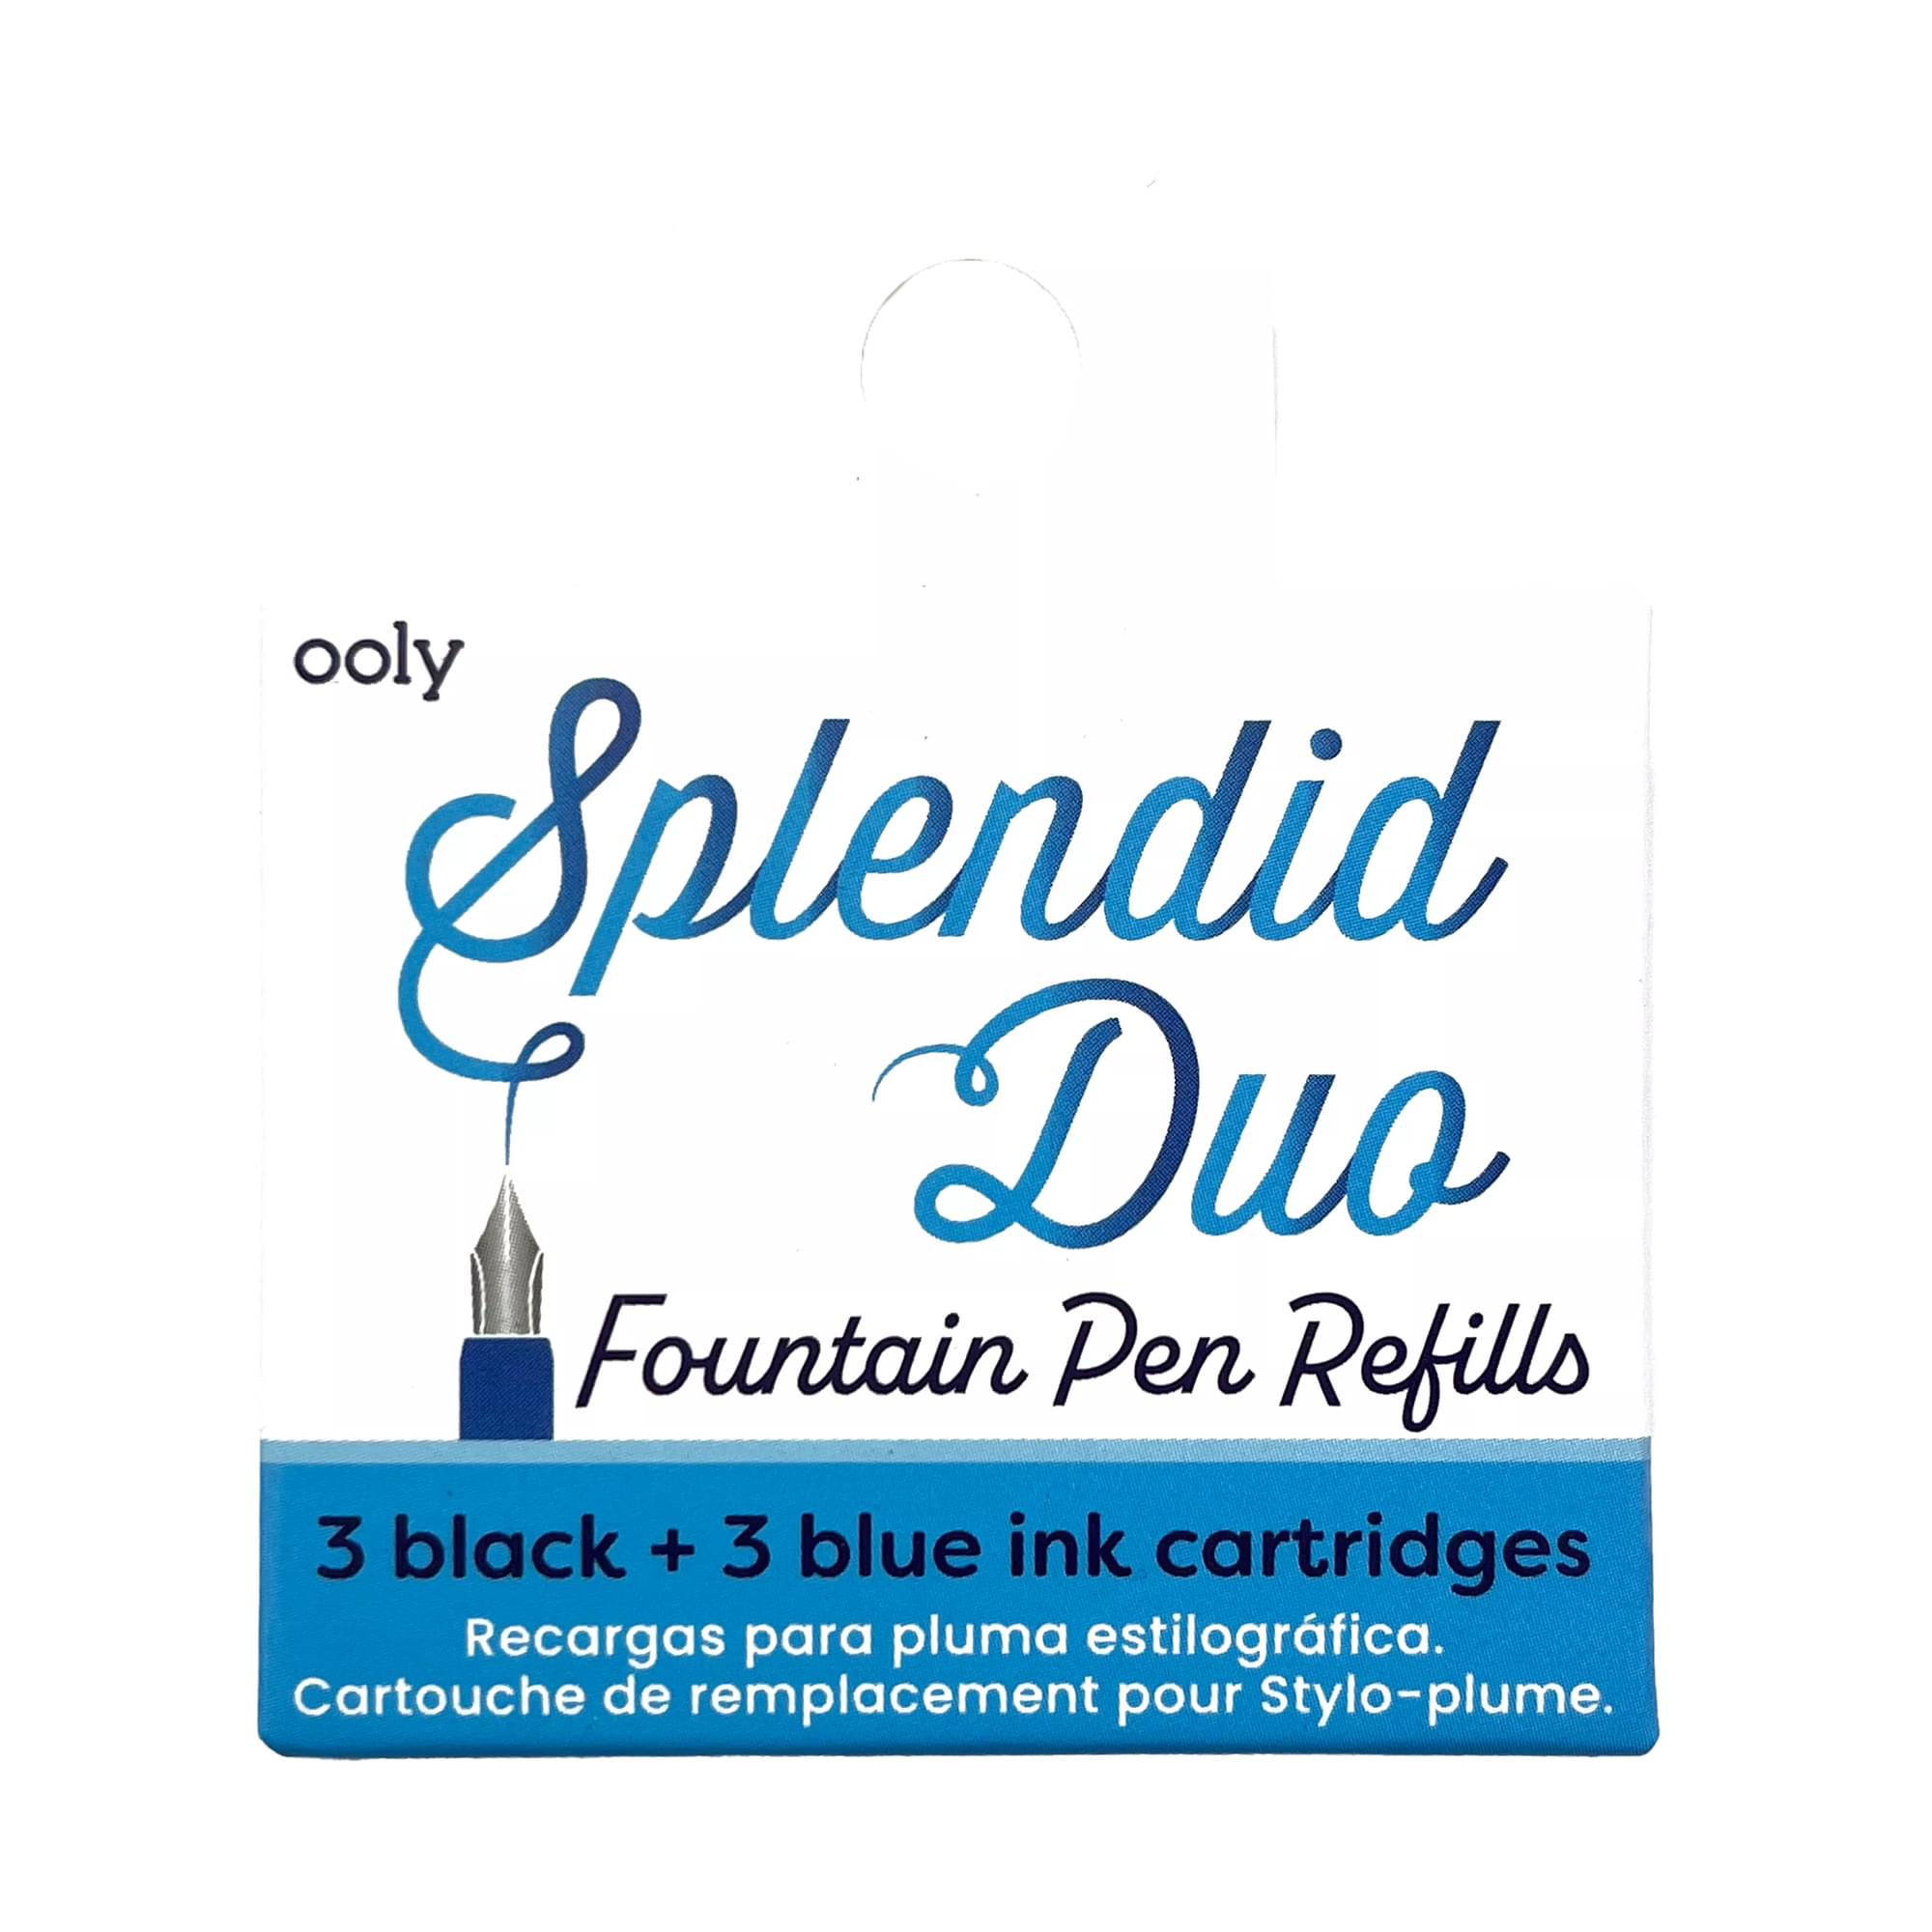 Splendid Duo Fountain Pen Refills - 3 Black & 3 Blue Ink Cartridges front of packaging